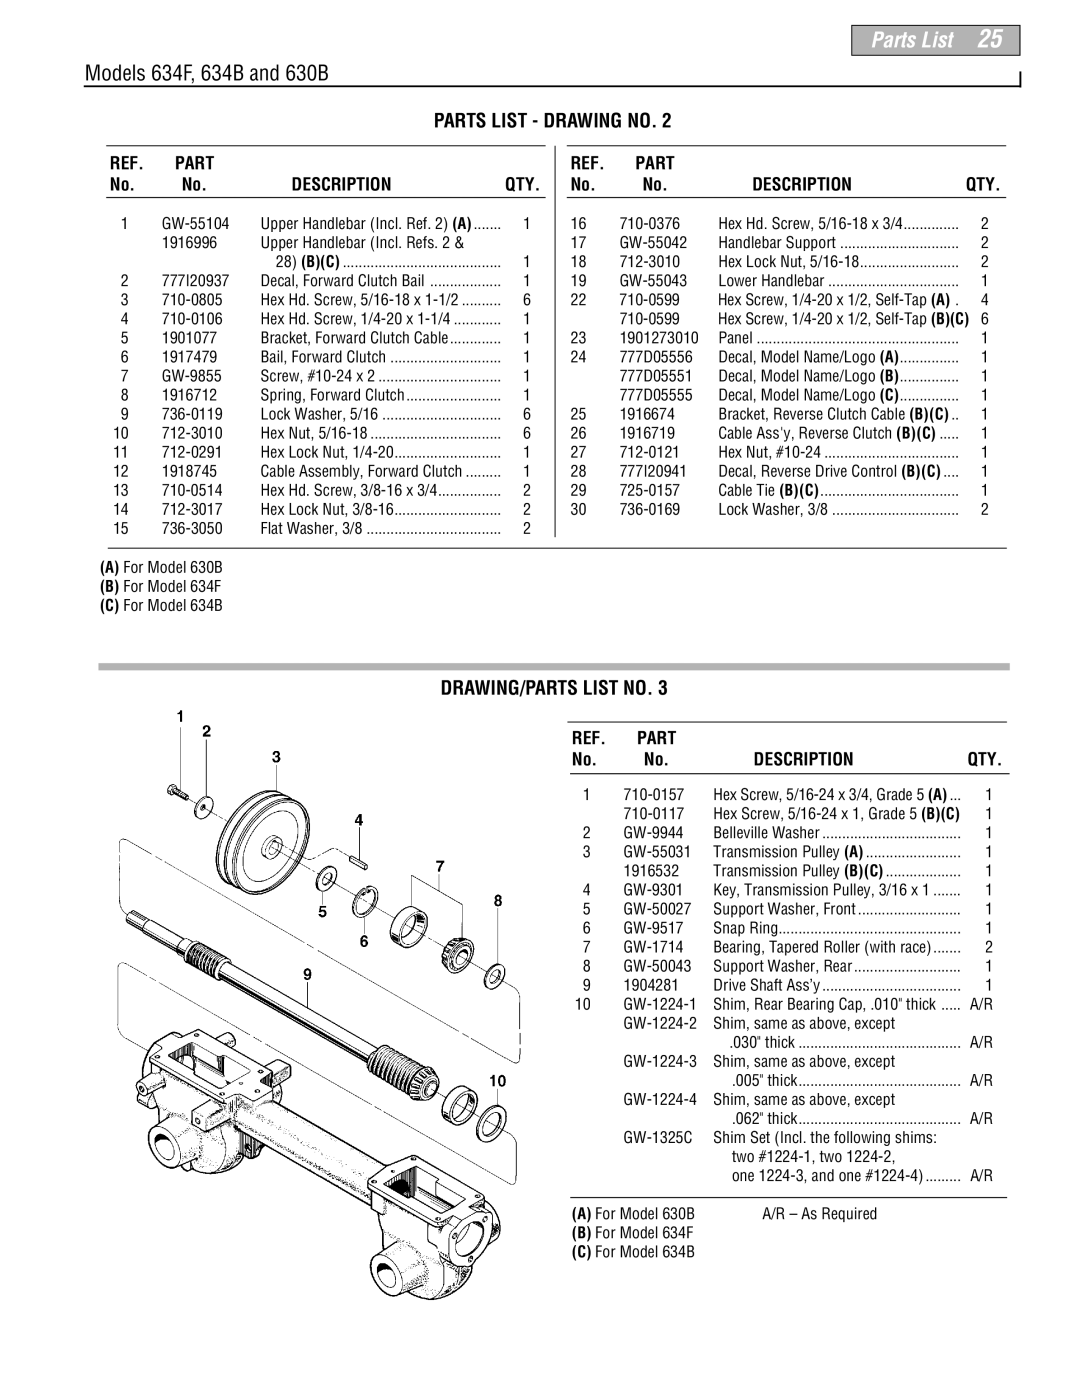 Troy-Bilt 630B-Tuffy, 634F-Bronco, 634B-Super Bronco manual Parts List - Drawing No, Drawing/Parts List No, Description 